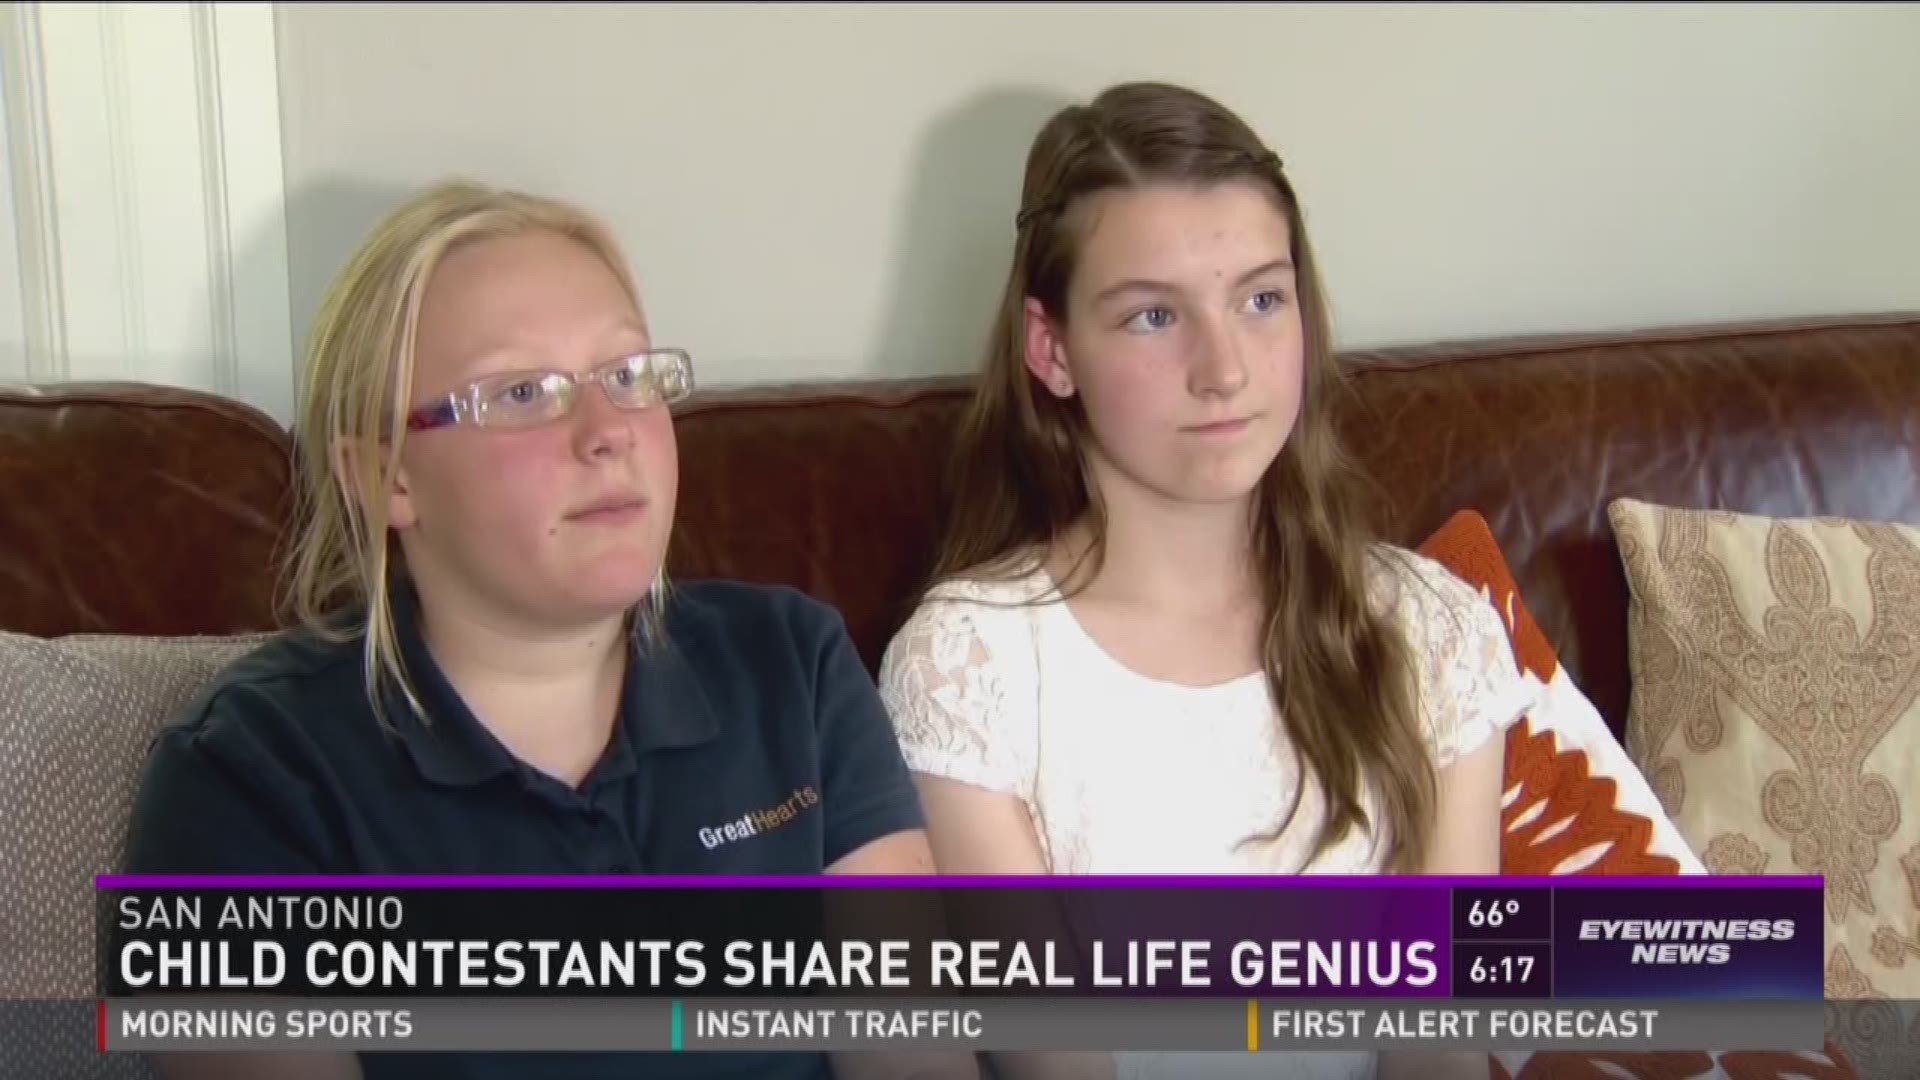 Child contestants share real life genius